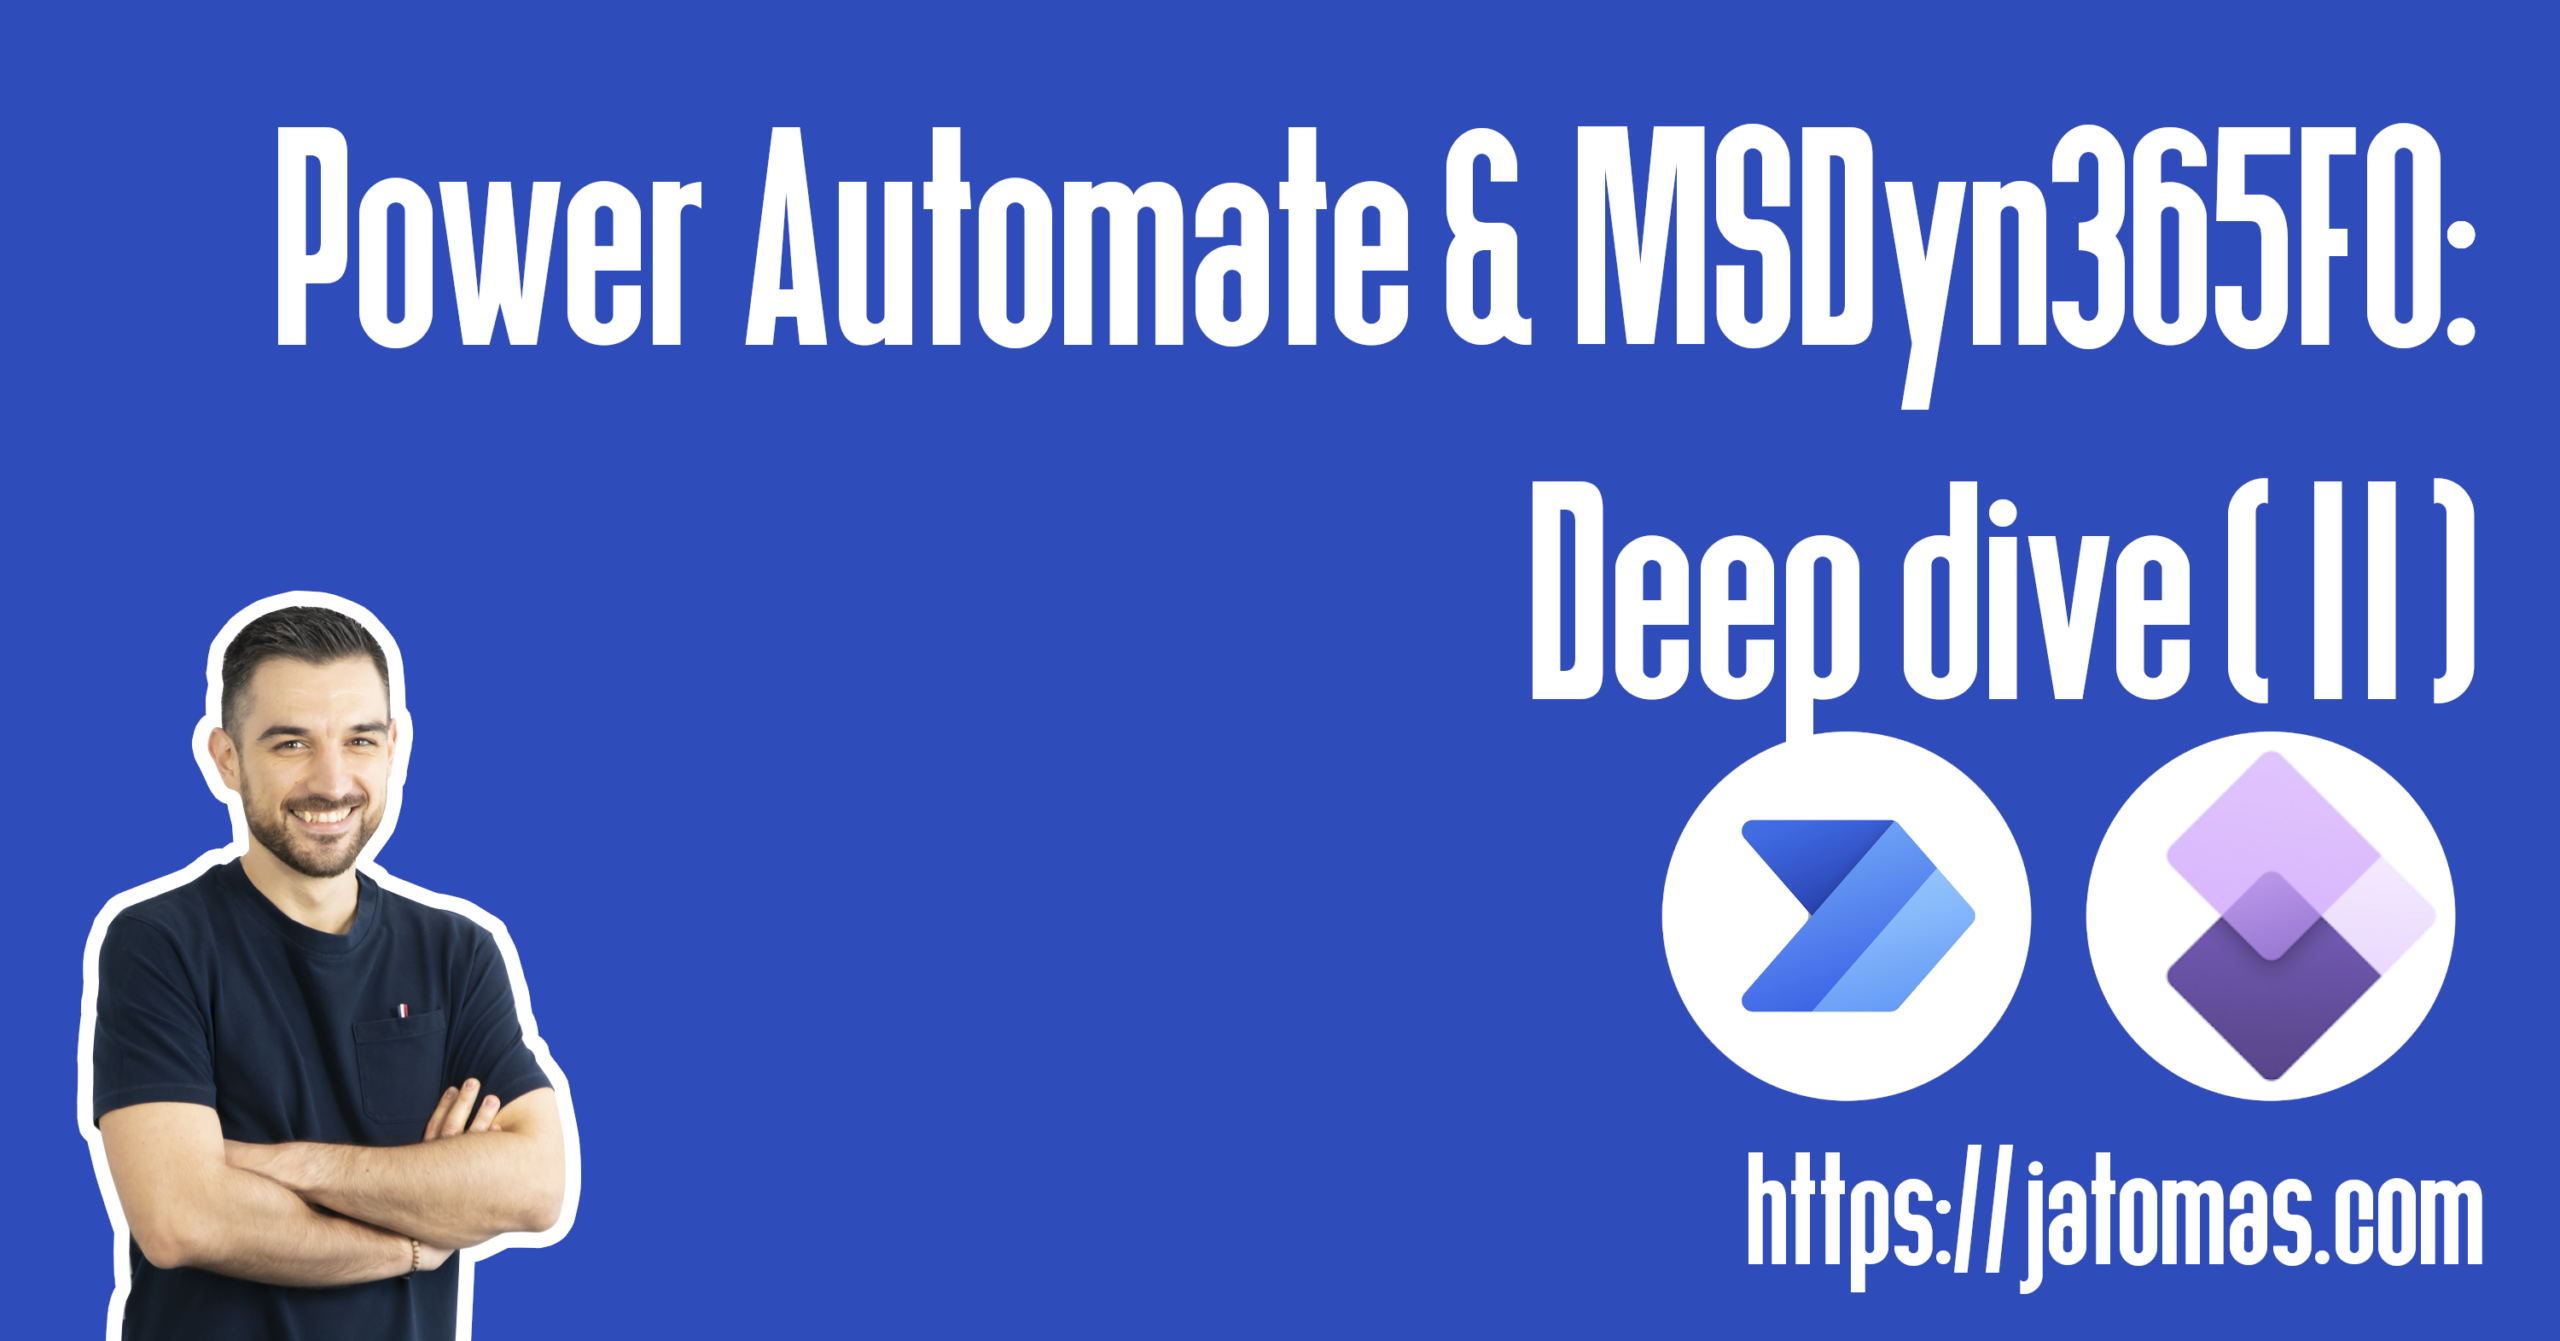 Power Automate & MSDyn365FO: Deep dive (II)